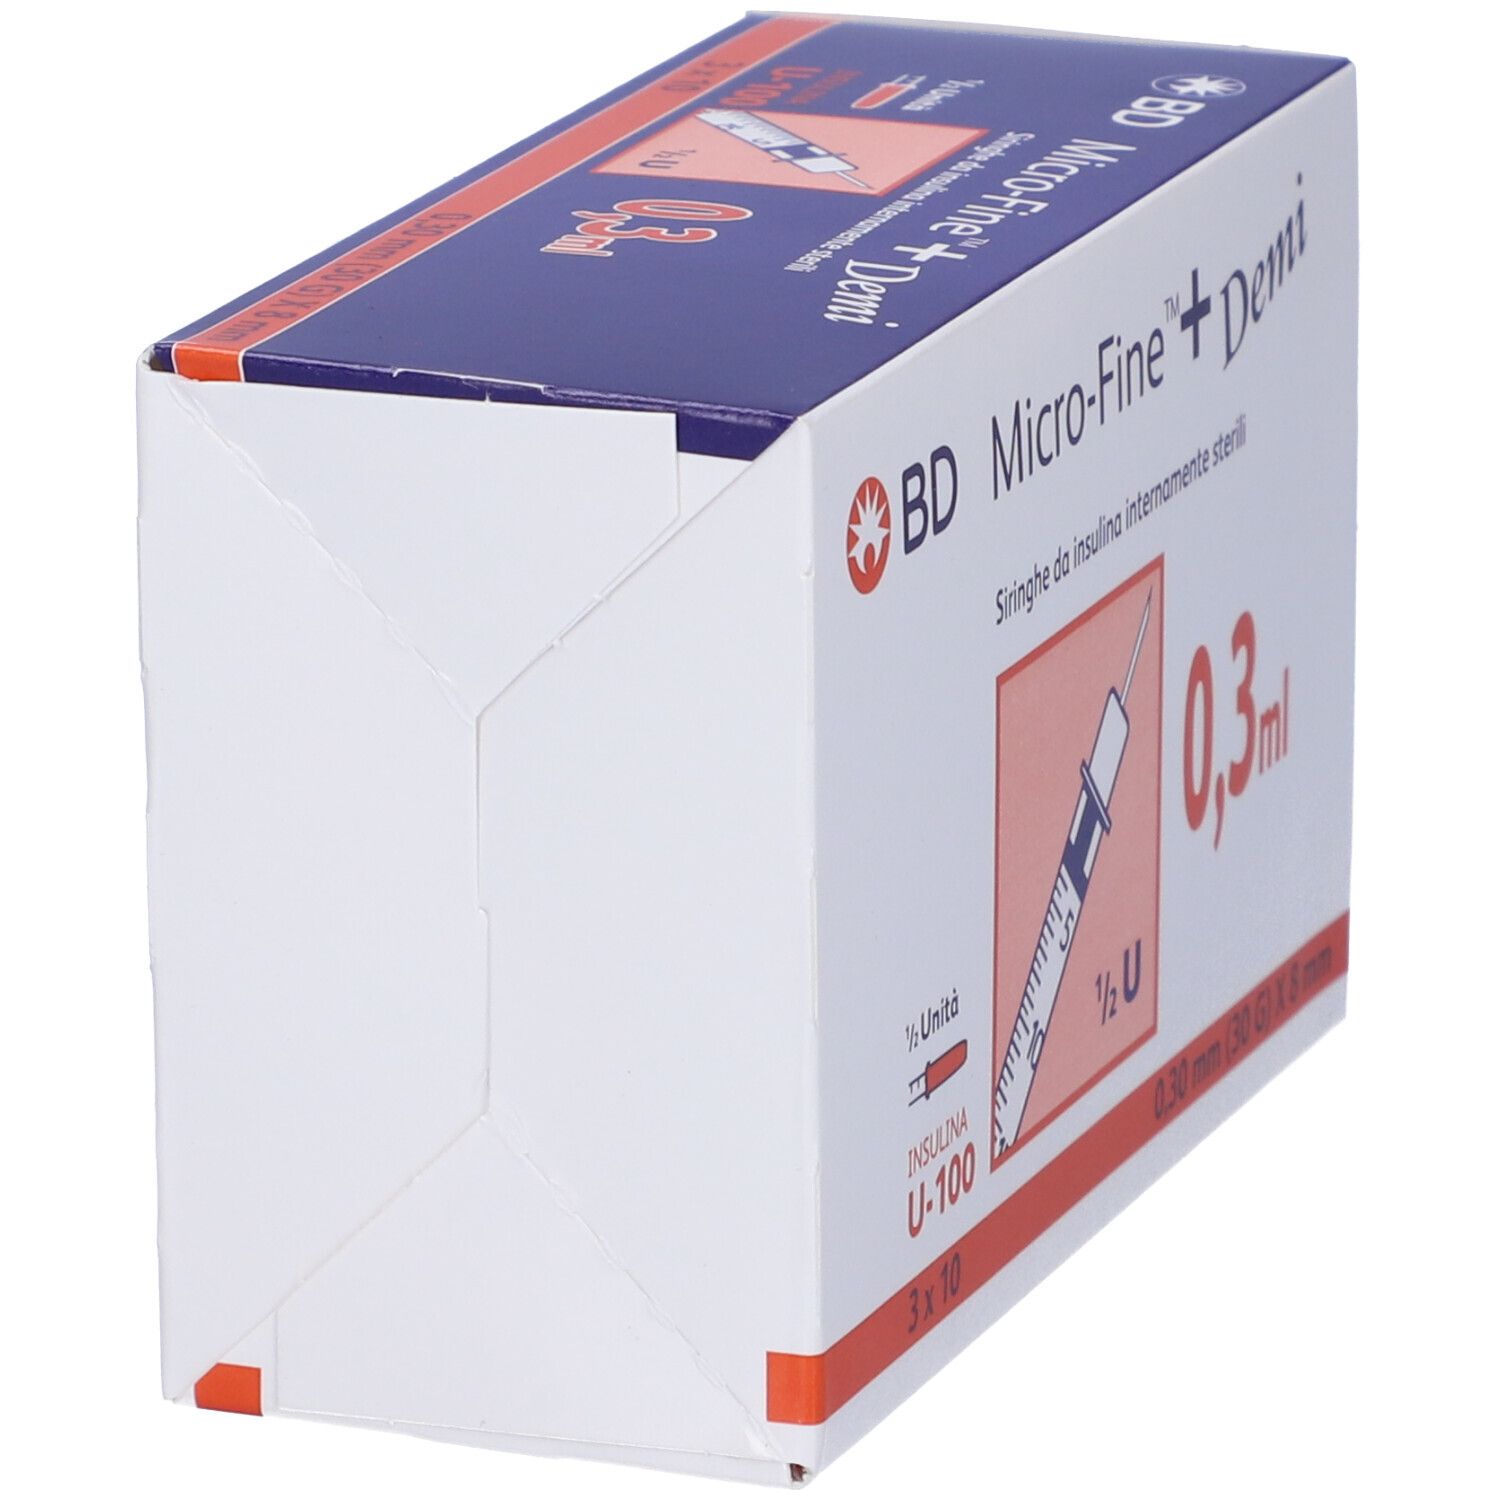 BD Micro-Fine™+ Siringhe 0.3 ml 0.30 mm (30G) x 8 mm Demì